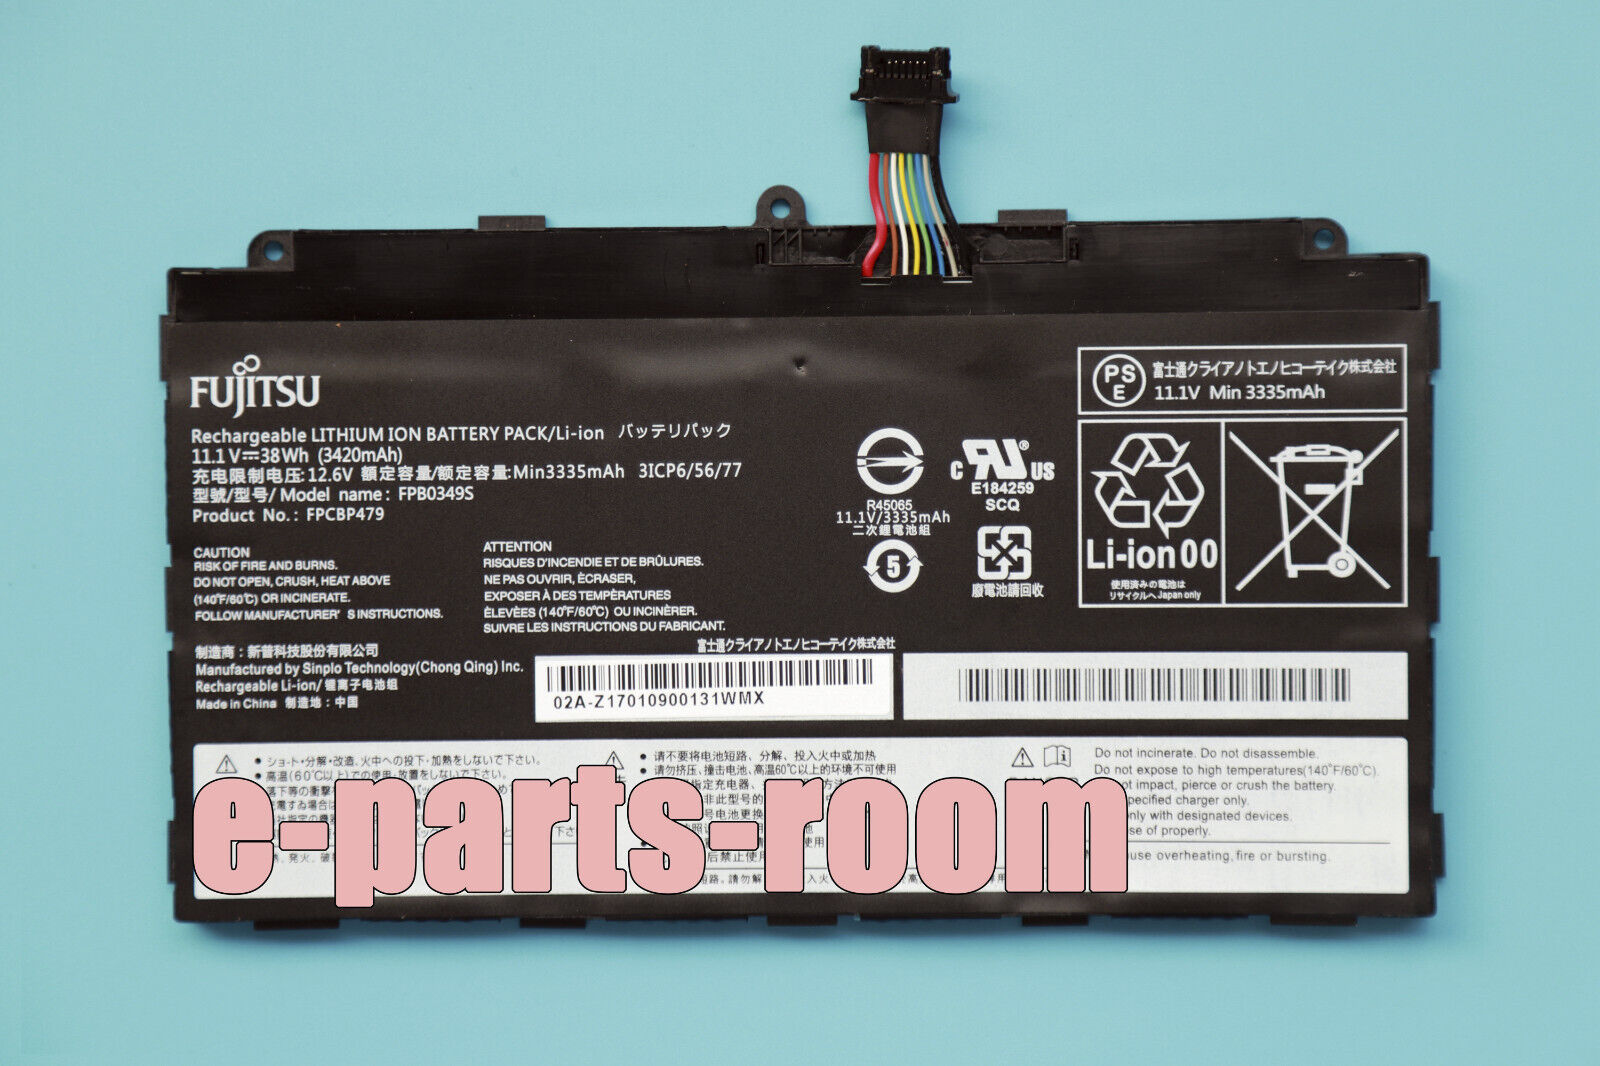 NEW Genuine FPB0349S FPCBP479 Battery for Fujitsu Stylistic Q616 Q665 Q738 Q739